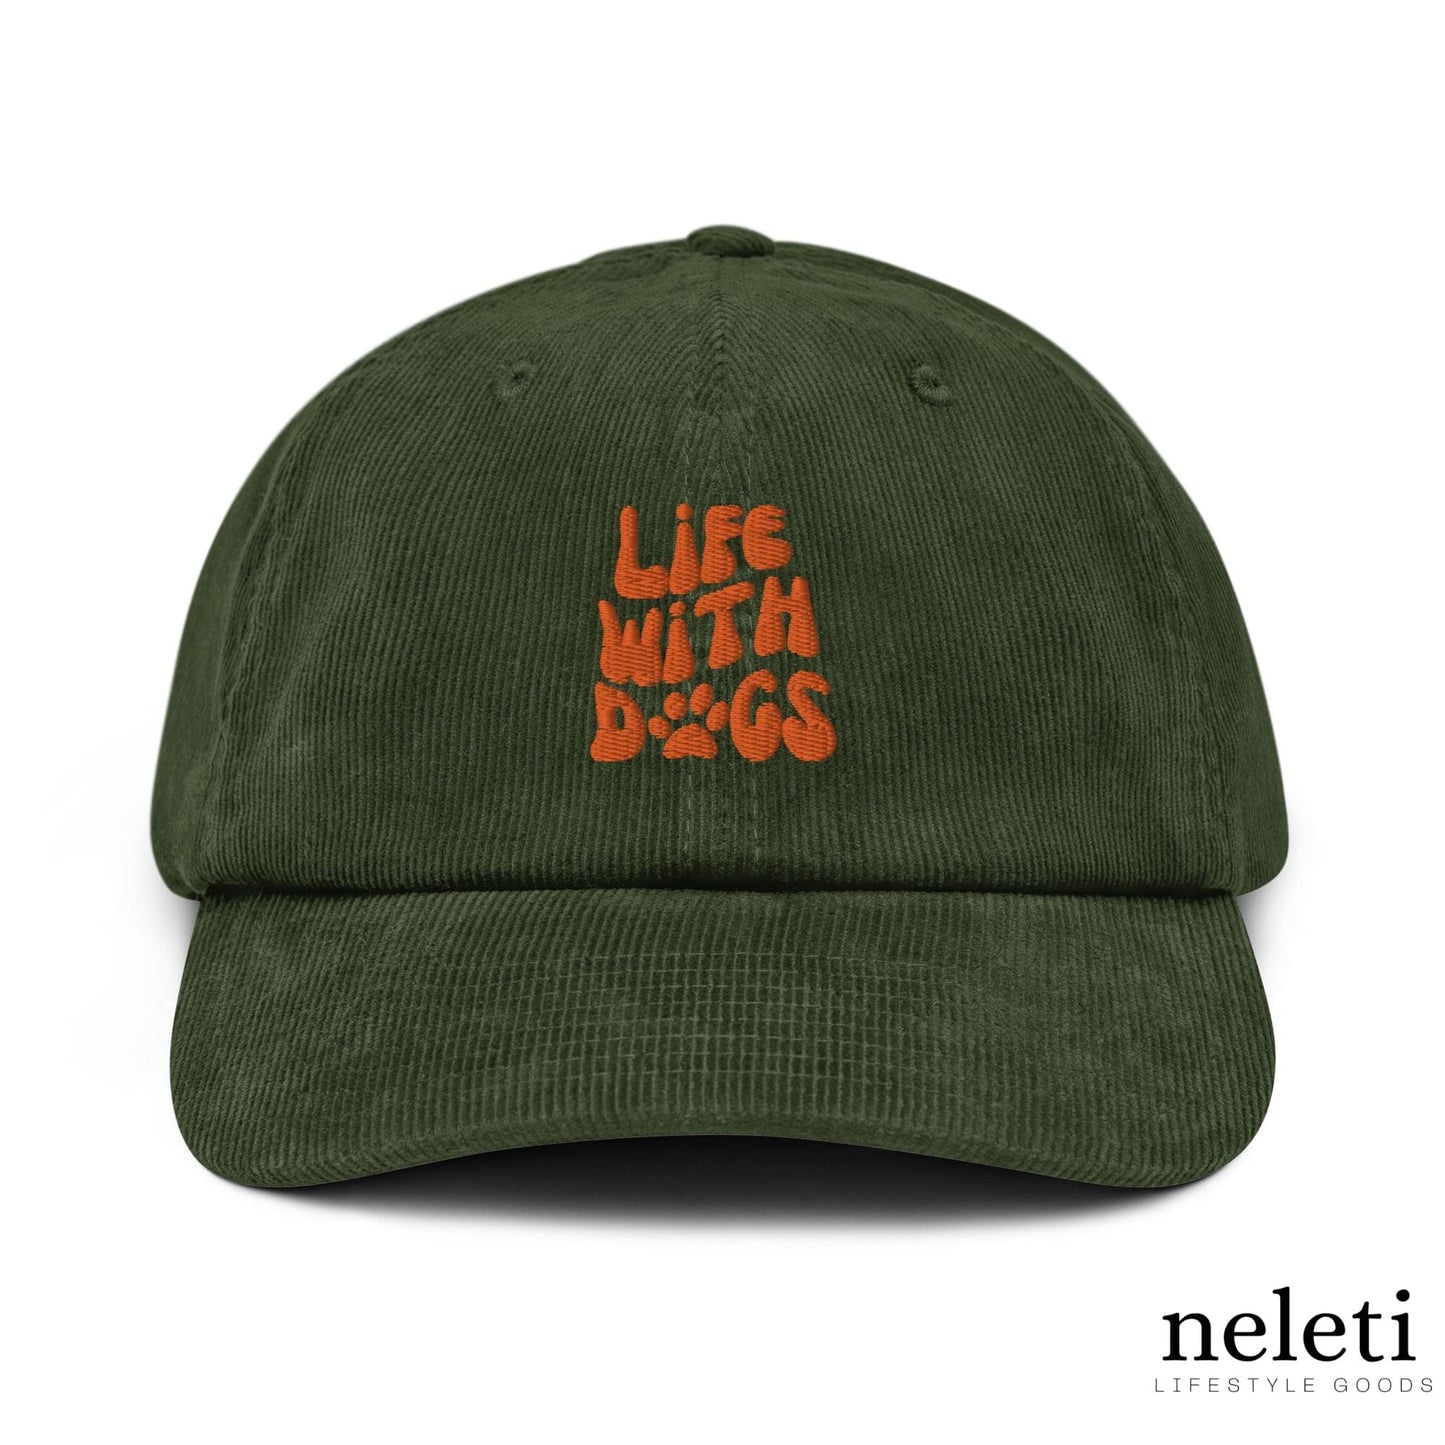 neleti.com-Dark-Olive-Corduroy-Hat